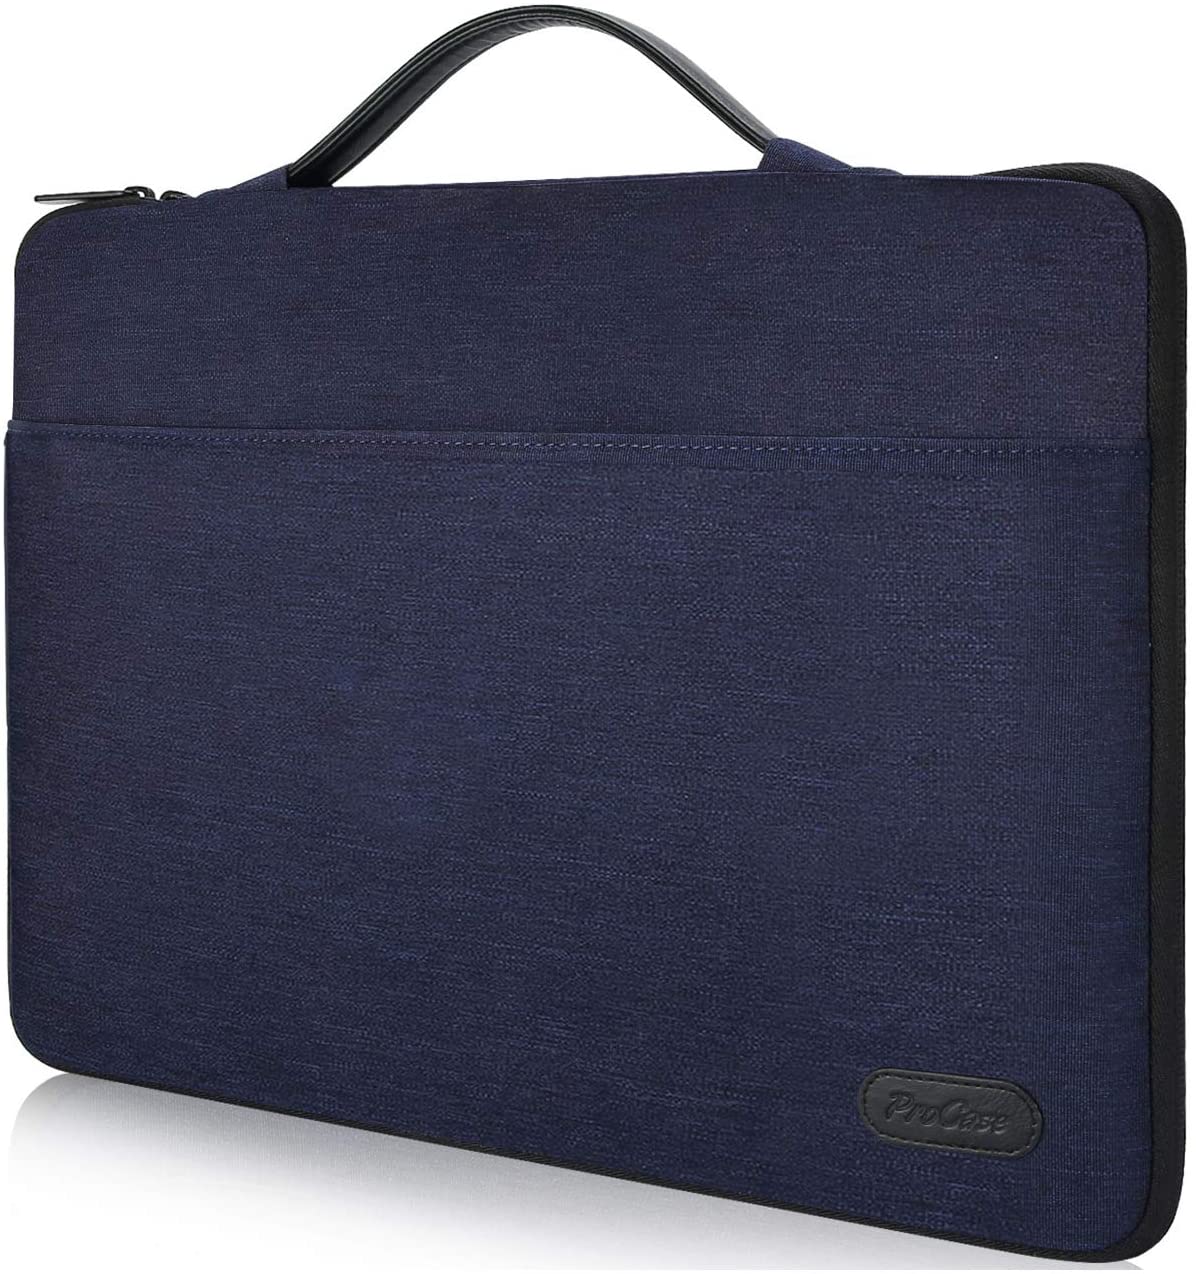 11 inch-12.3 inch Laptop Case Bag Chromebook Sleeve Universal Laptop Carrying Bag Notebook Ultrabook Bag Tablet Cover for MacBook Apple Samsung